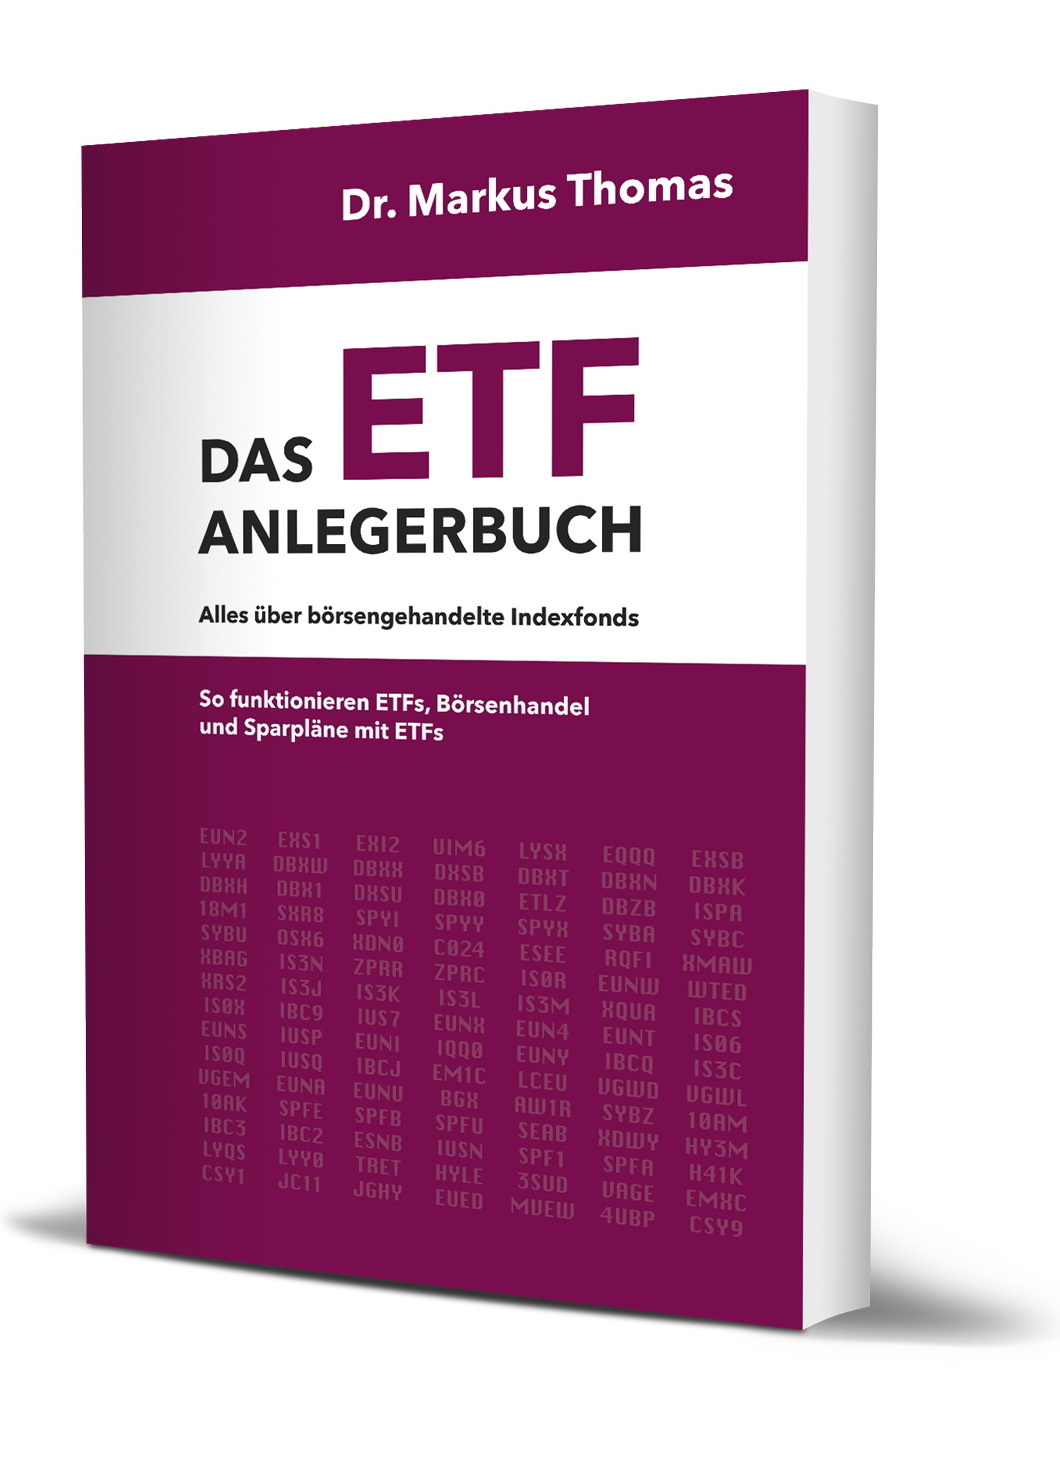 ETF Rating